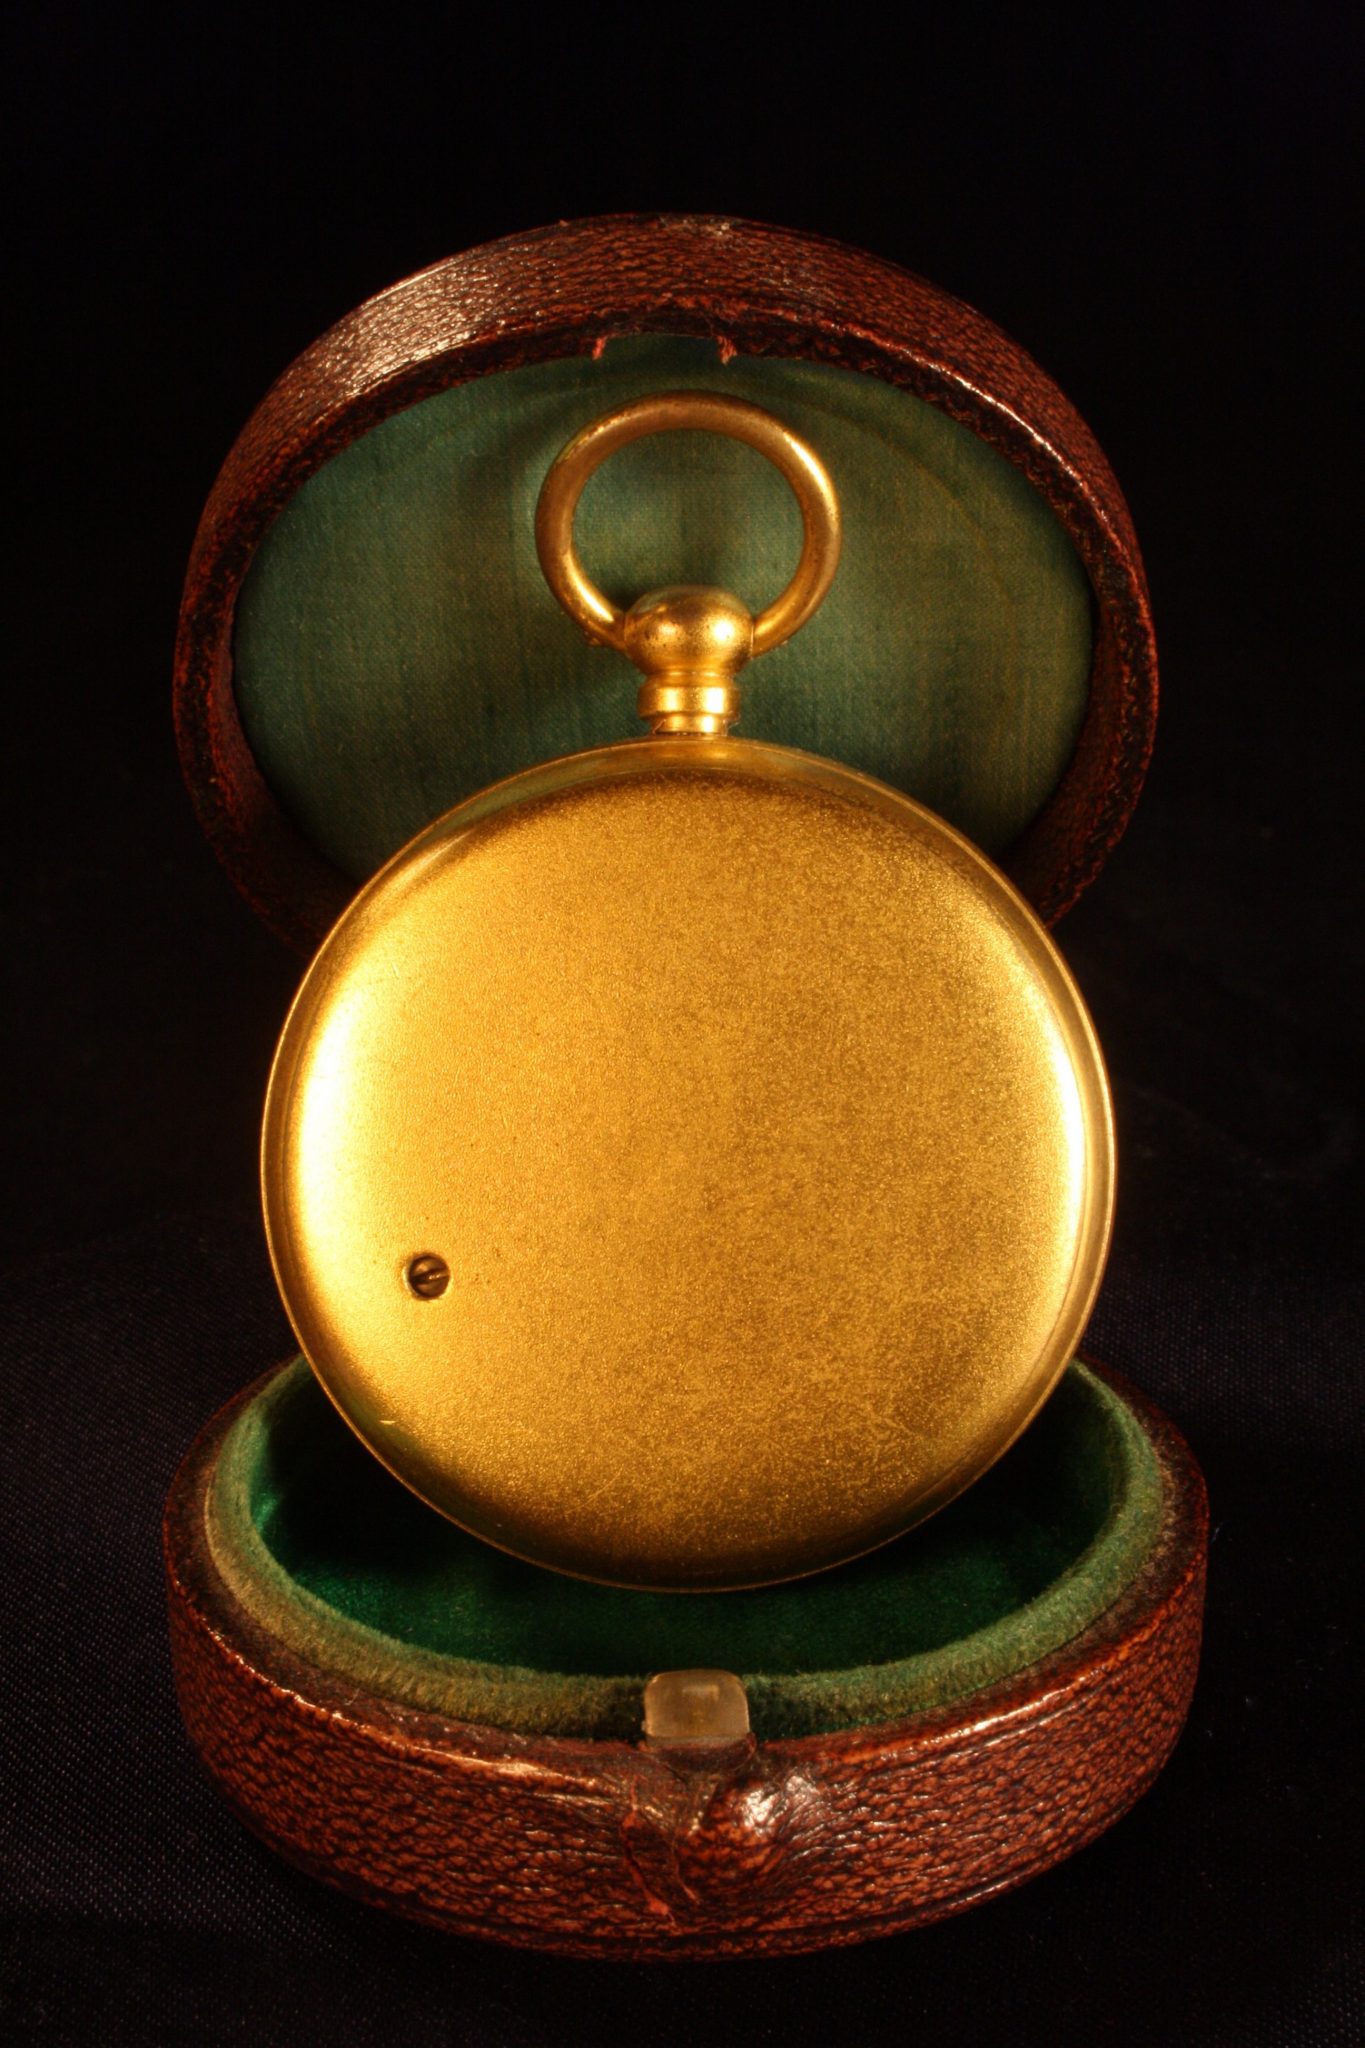 Image of Short & Mason Pocket Barometer Retailed by Heath & Stoneman